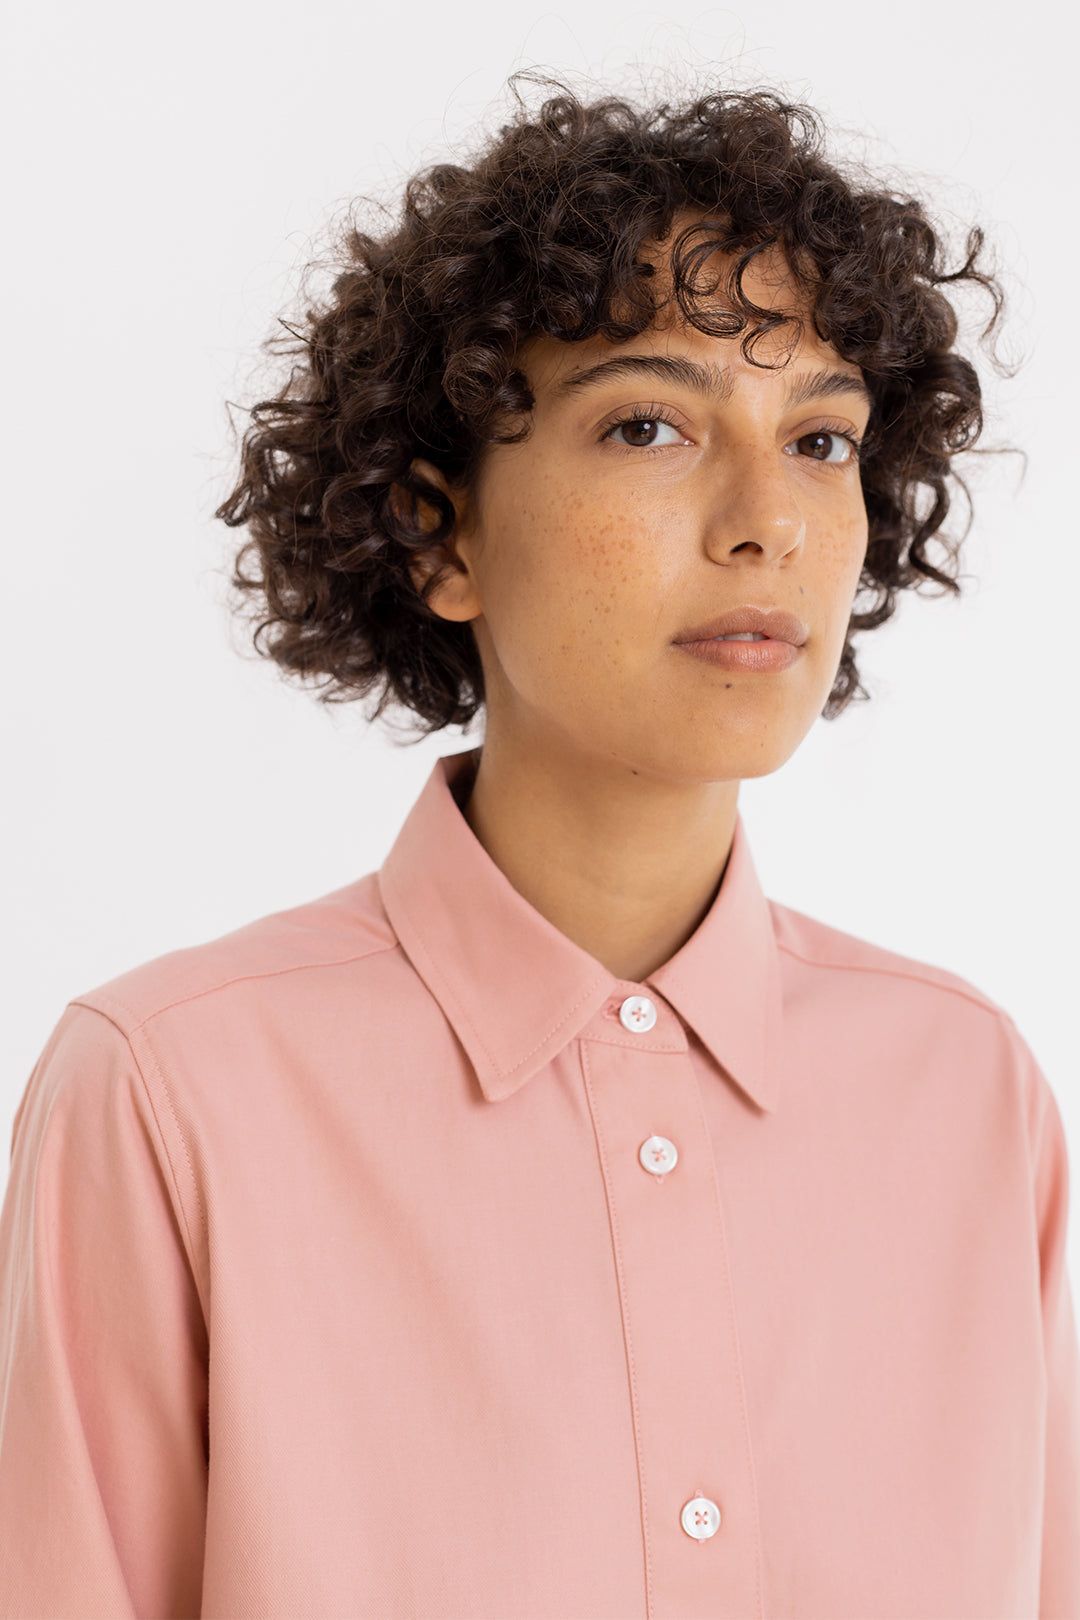 Organic cotton shirt pink